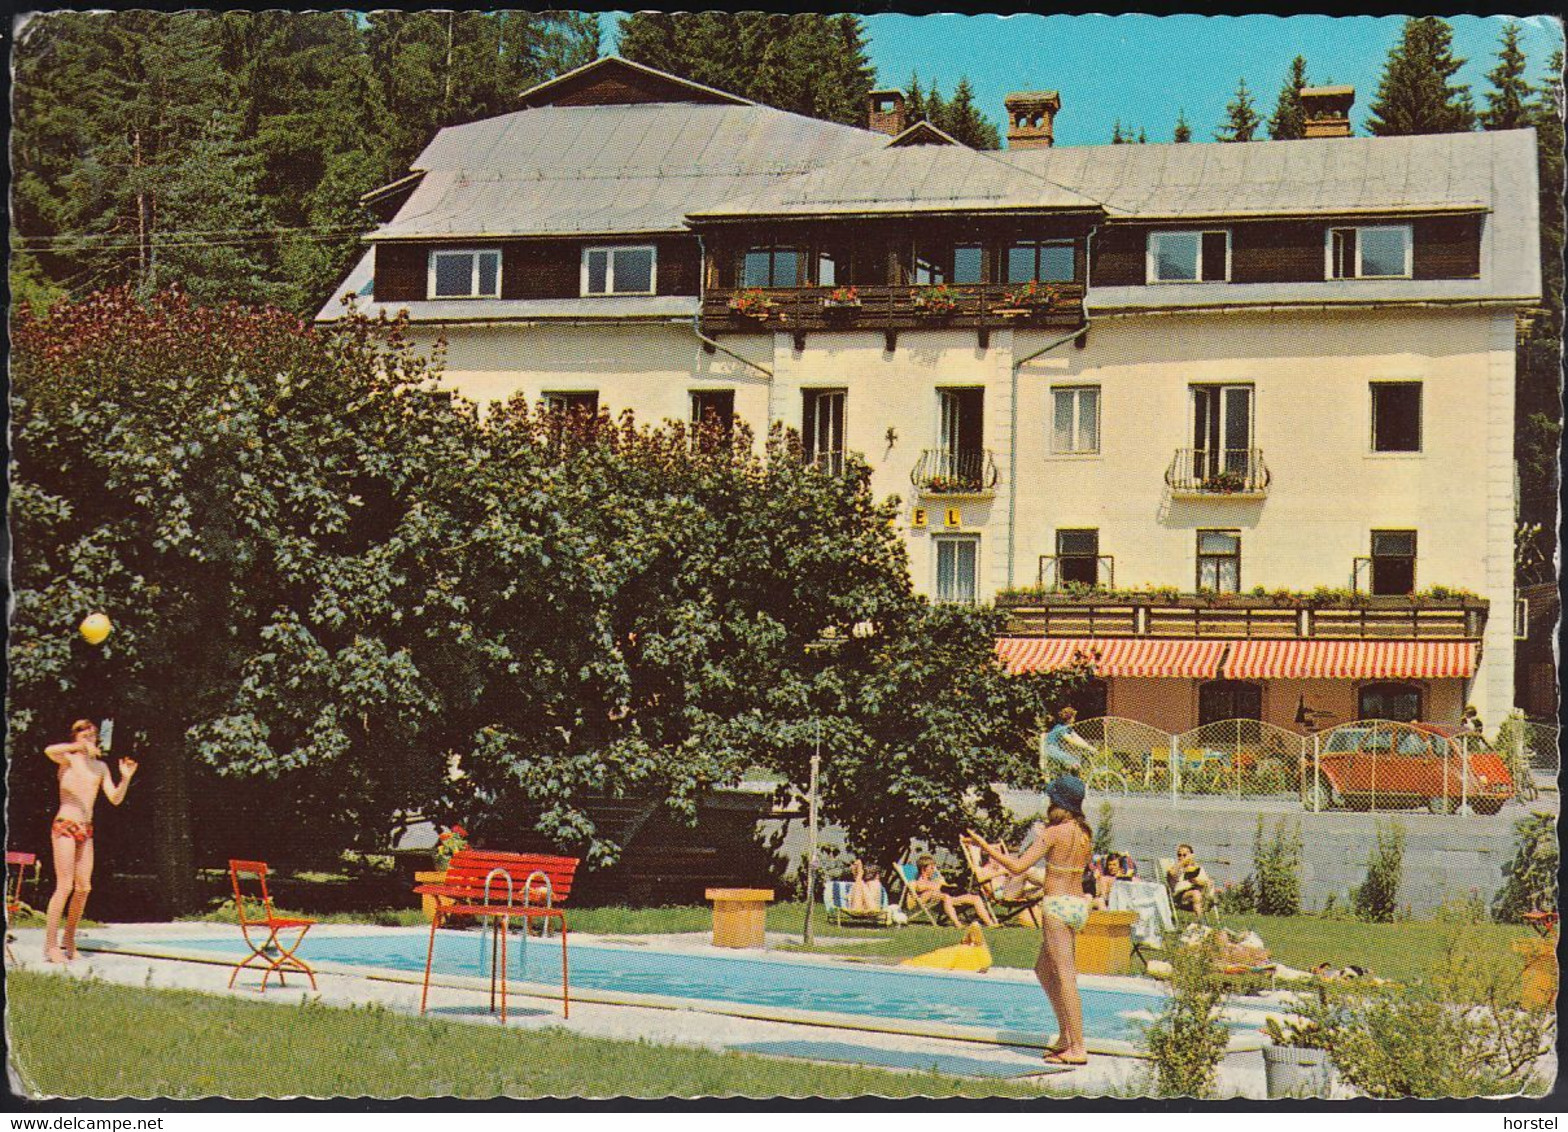 Austria - 9640 Kötschach-Mauthen - Hotel Kürschner - Schwimmingpool - Car - Citröen 2CV - Lesachtal